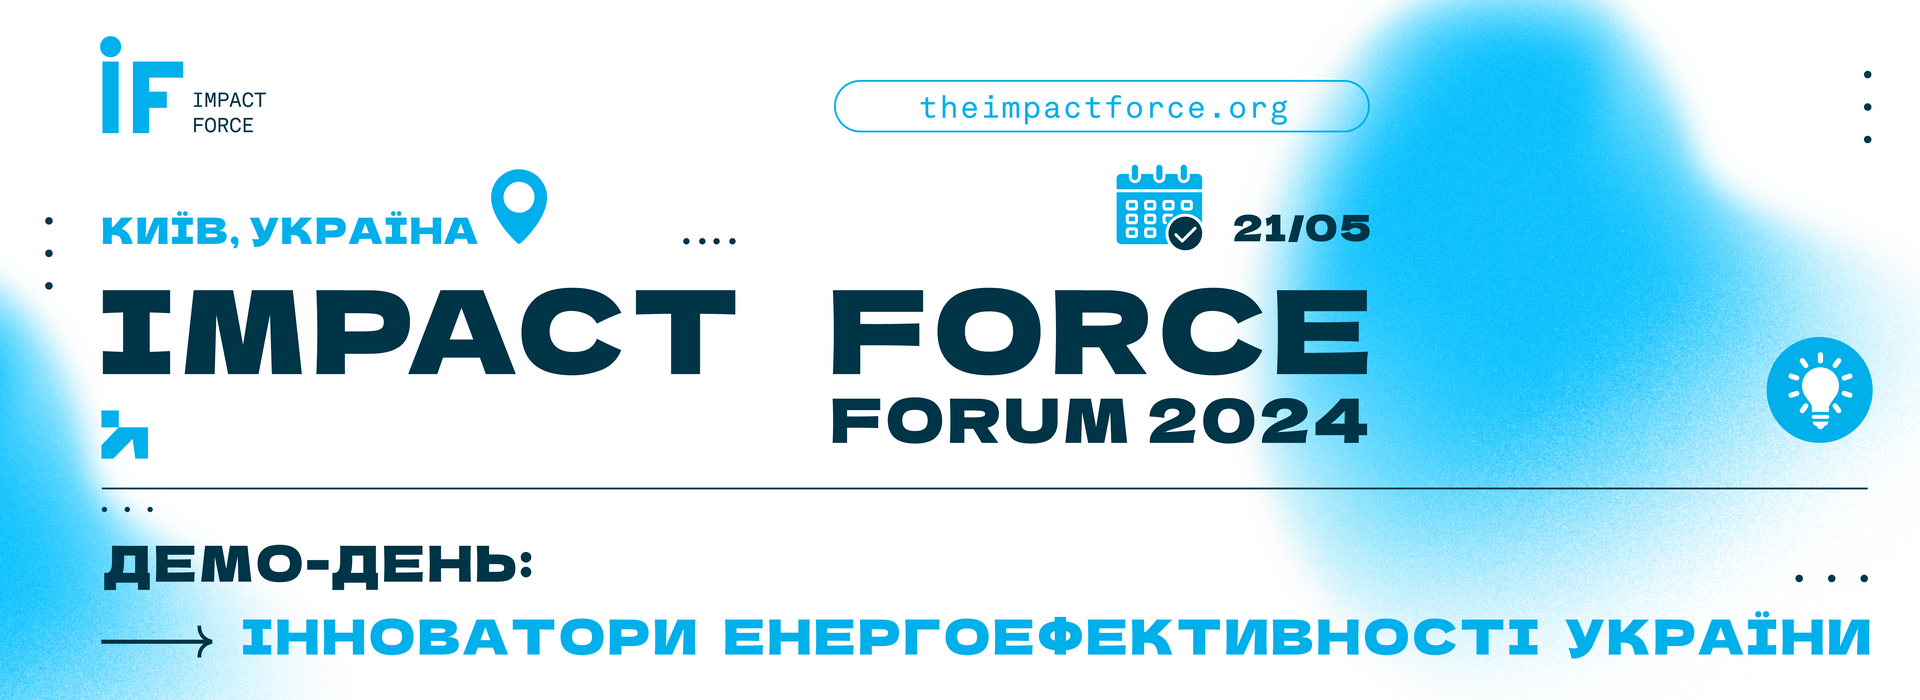 Impact Force Forum 2024